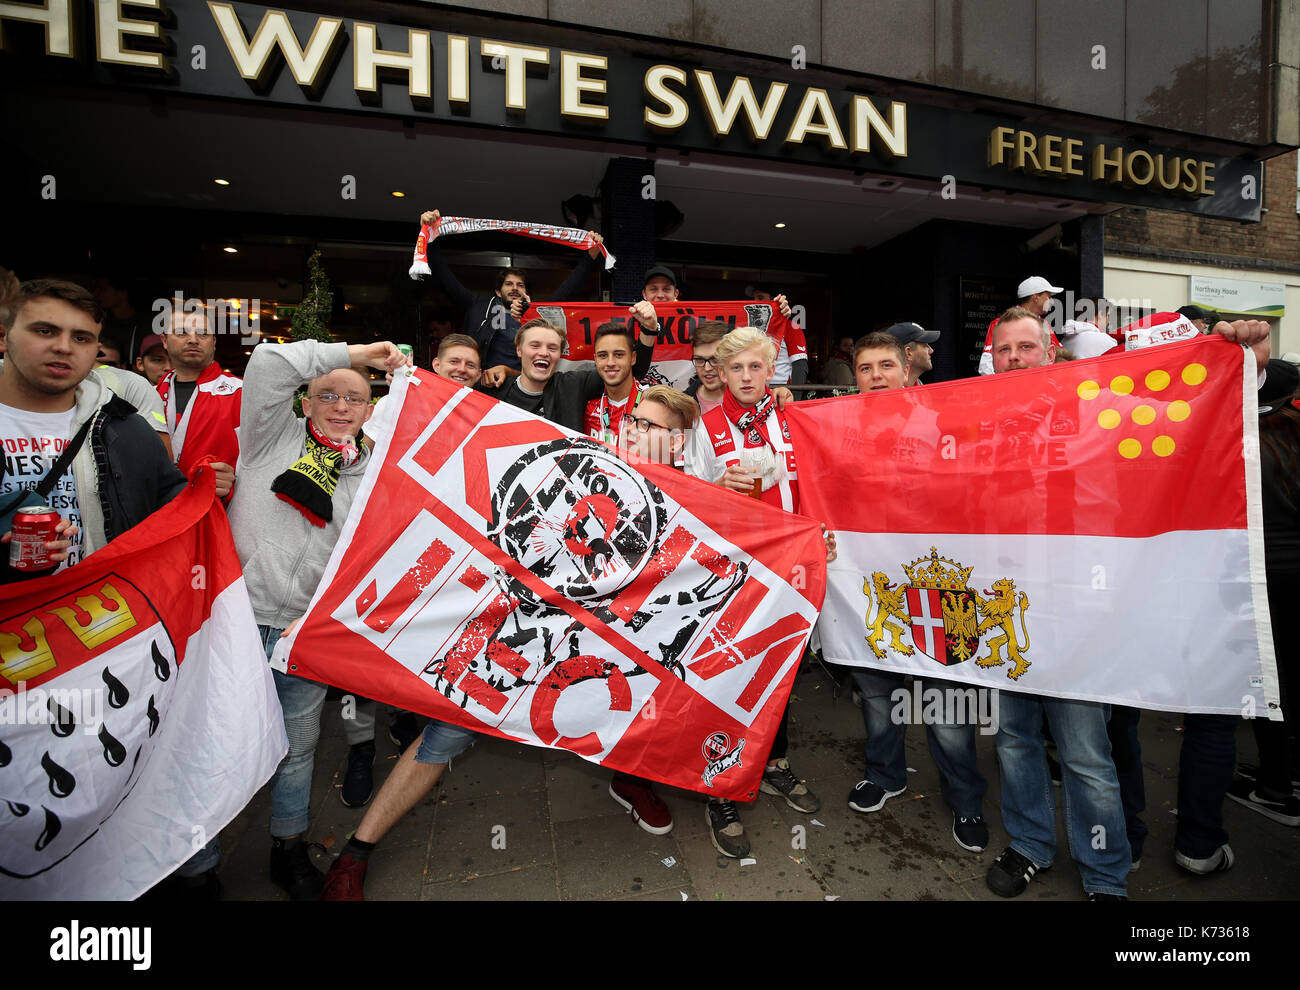 FC Koln fans outside The White Swan pub prior to the Europa League match at the Emirates Stadium, London. Stock Photo